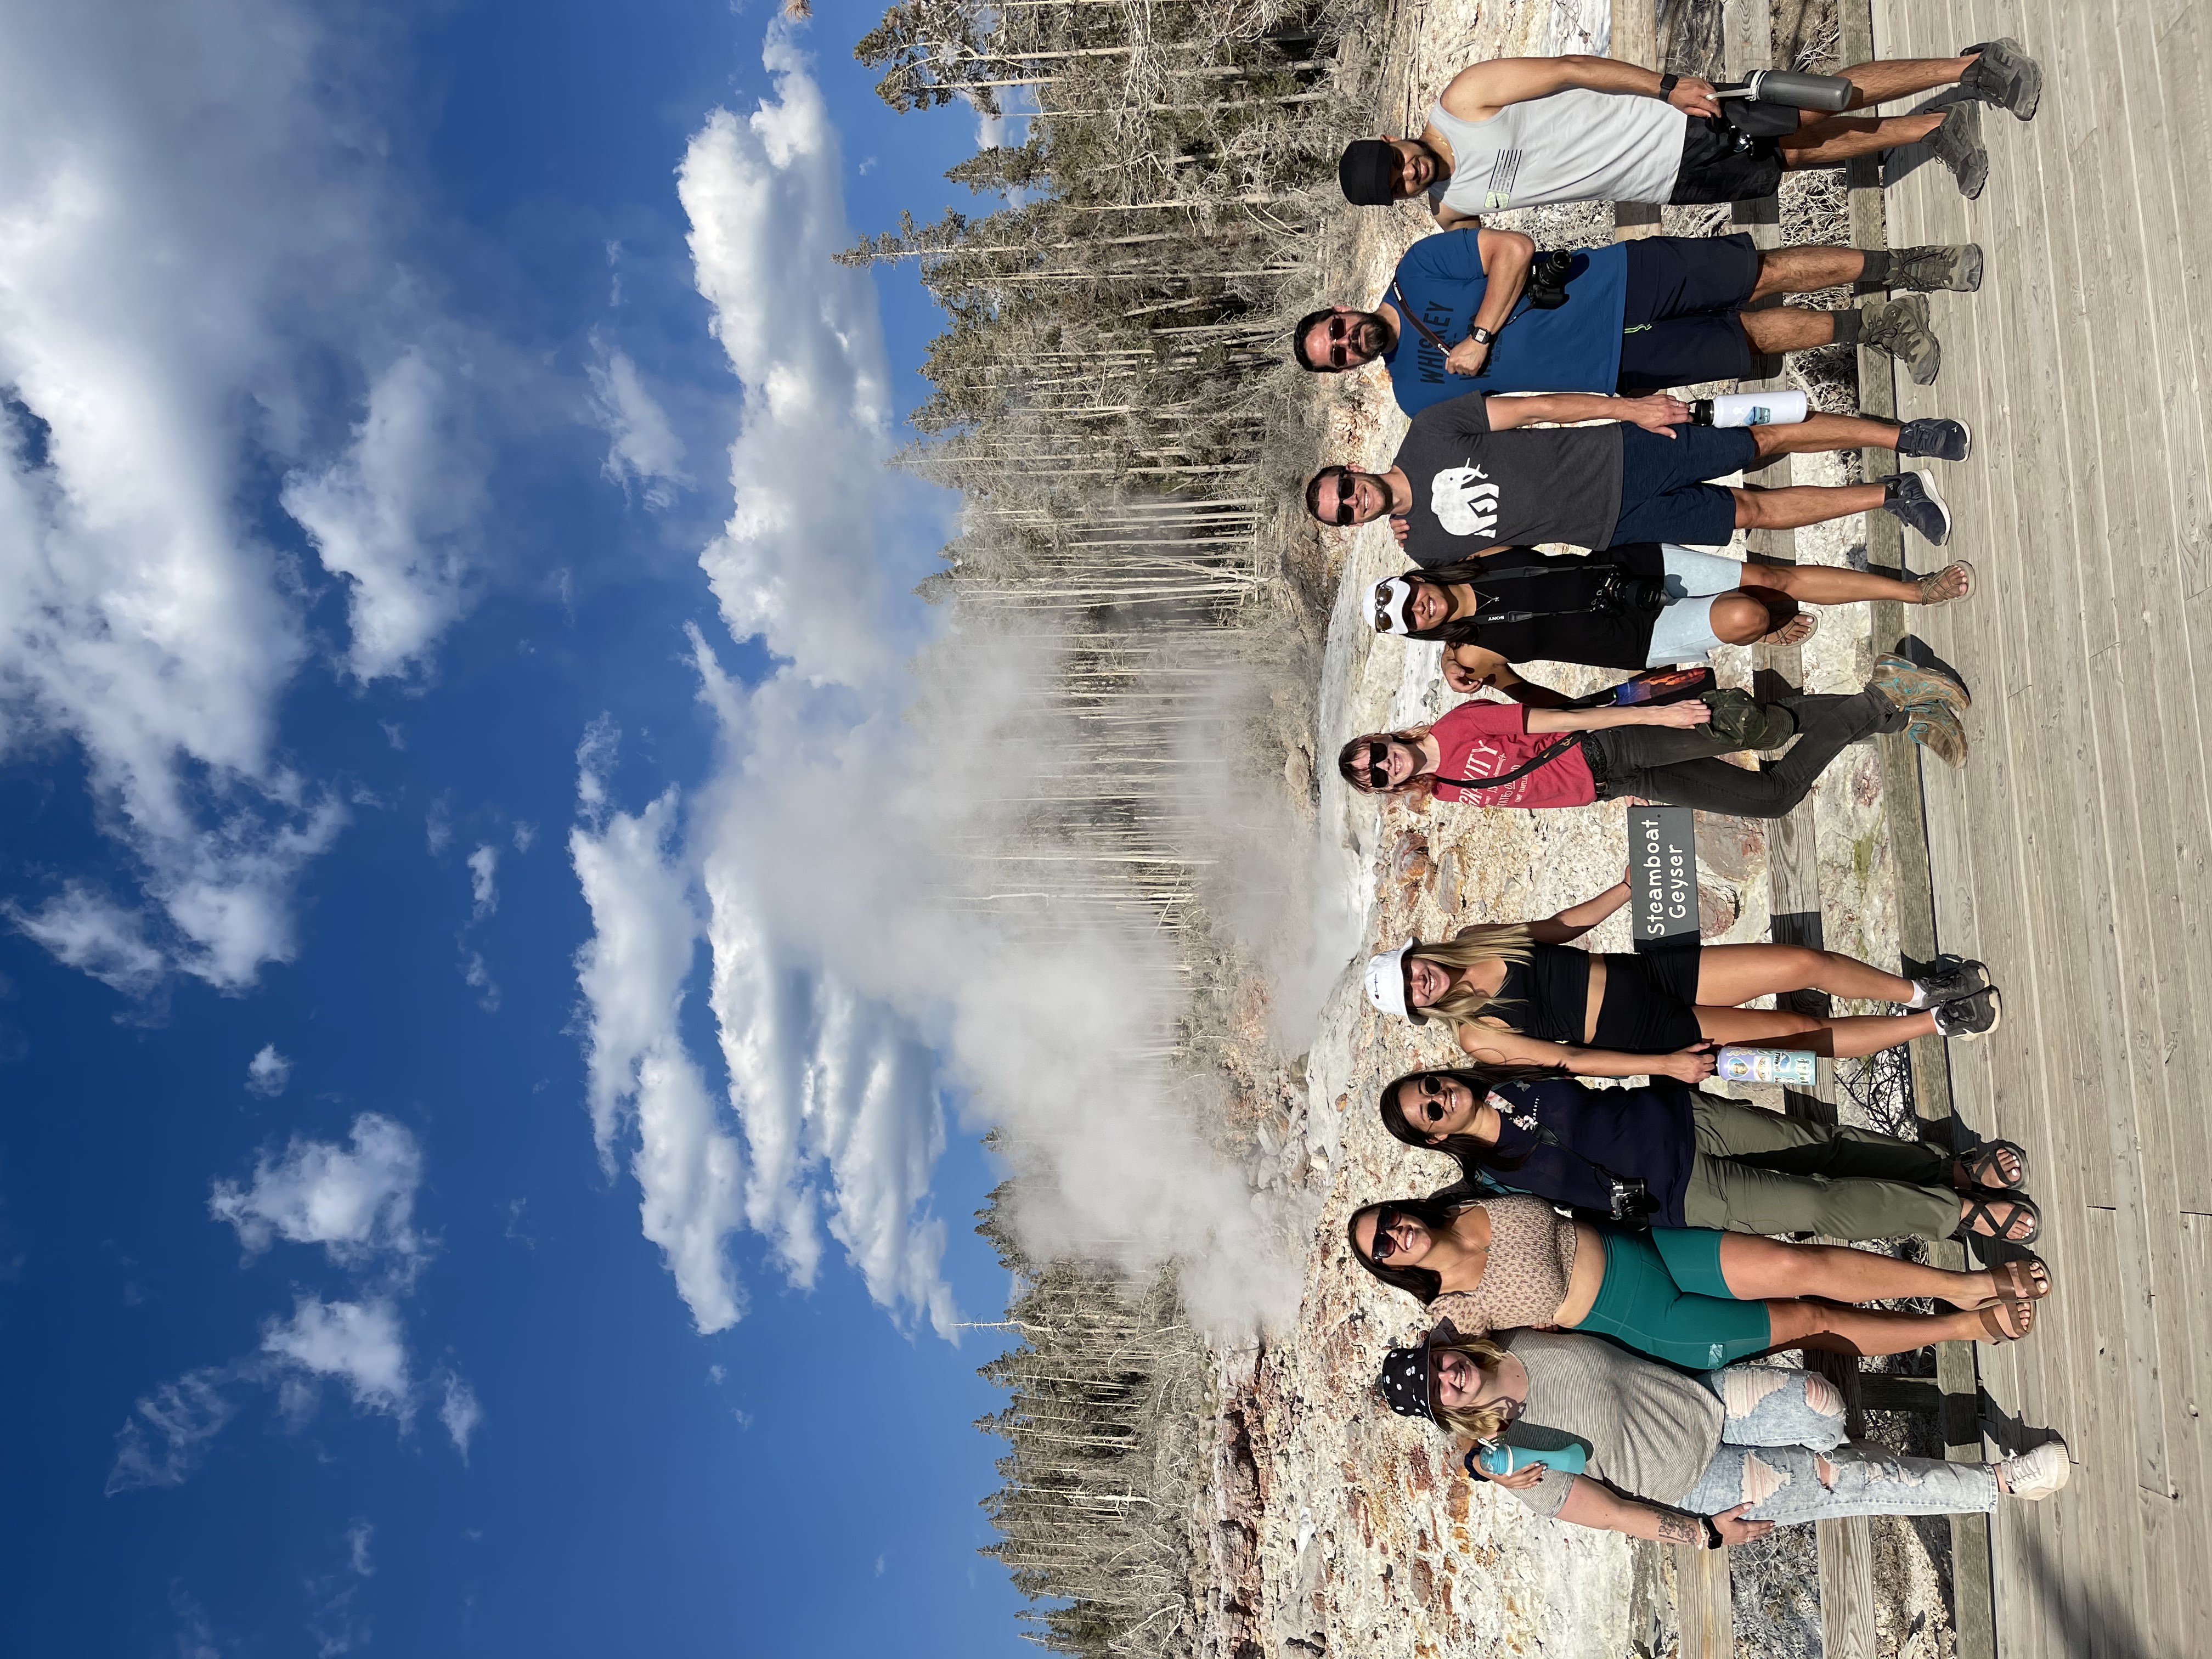 Yellowstone Group Trip Highlights